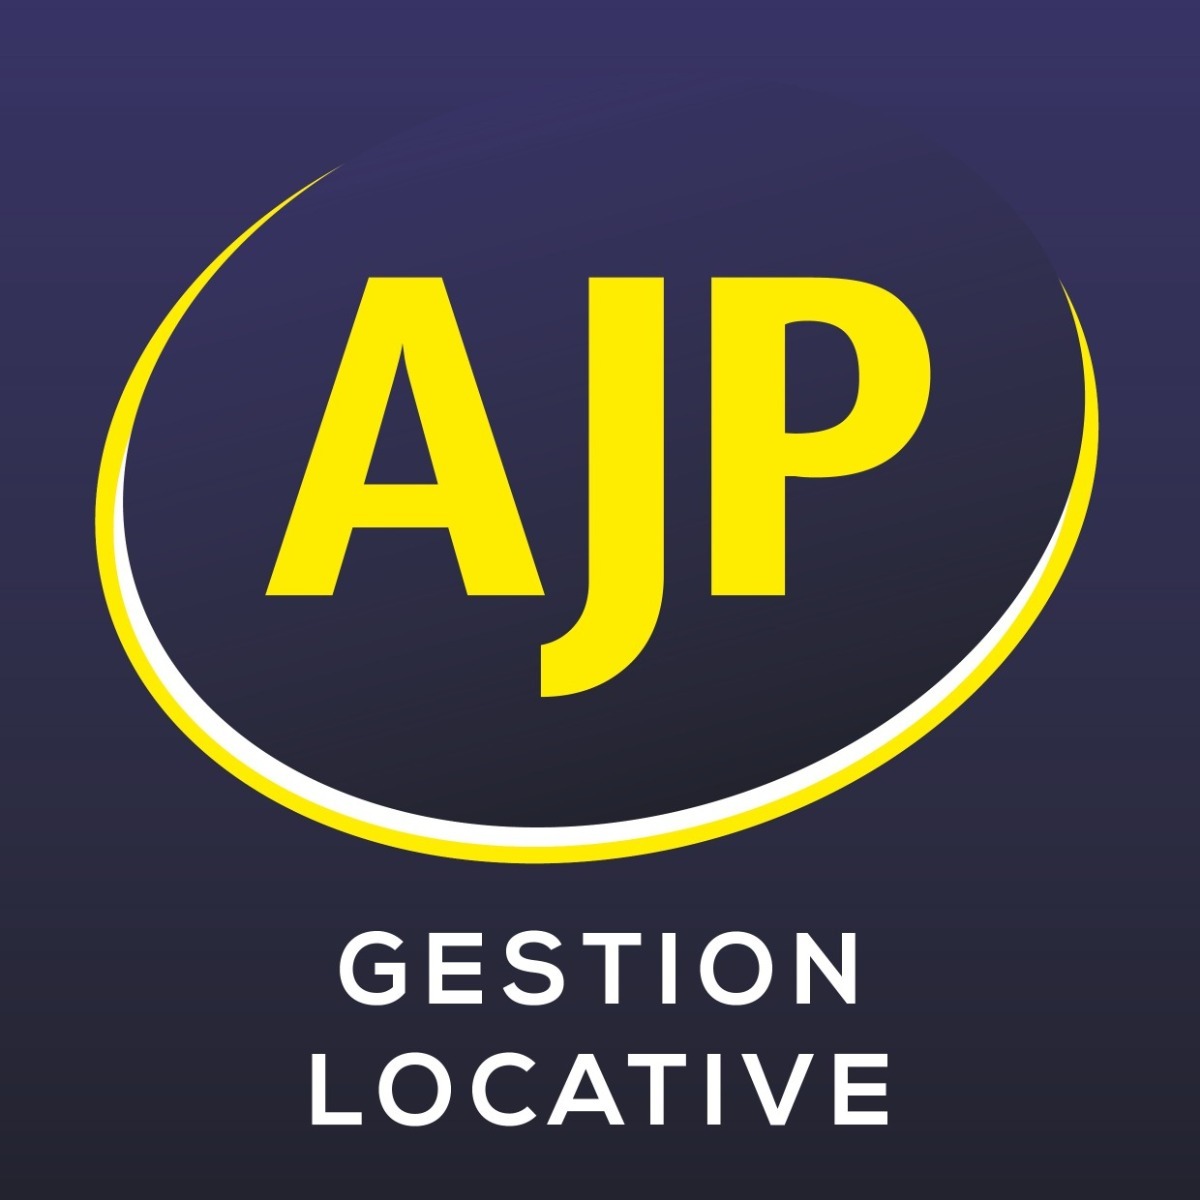 AJP Gestion Locative